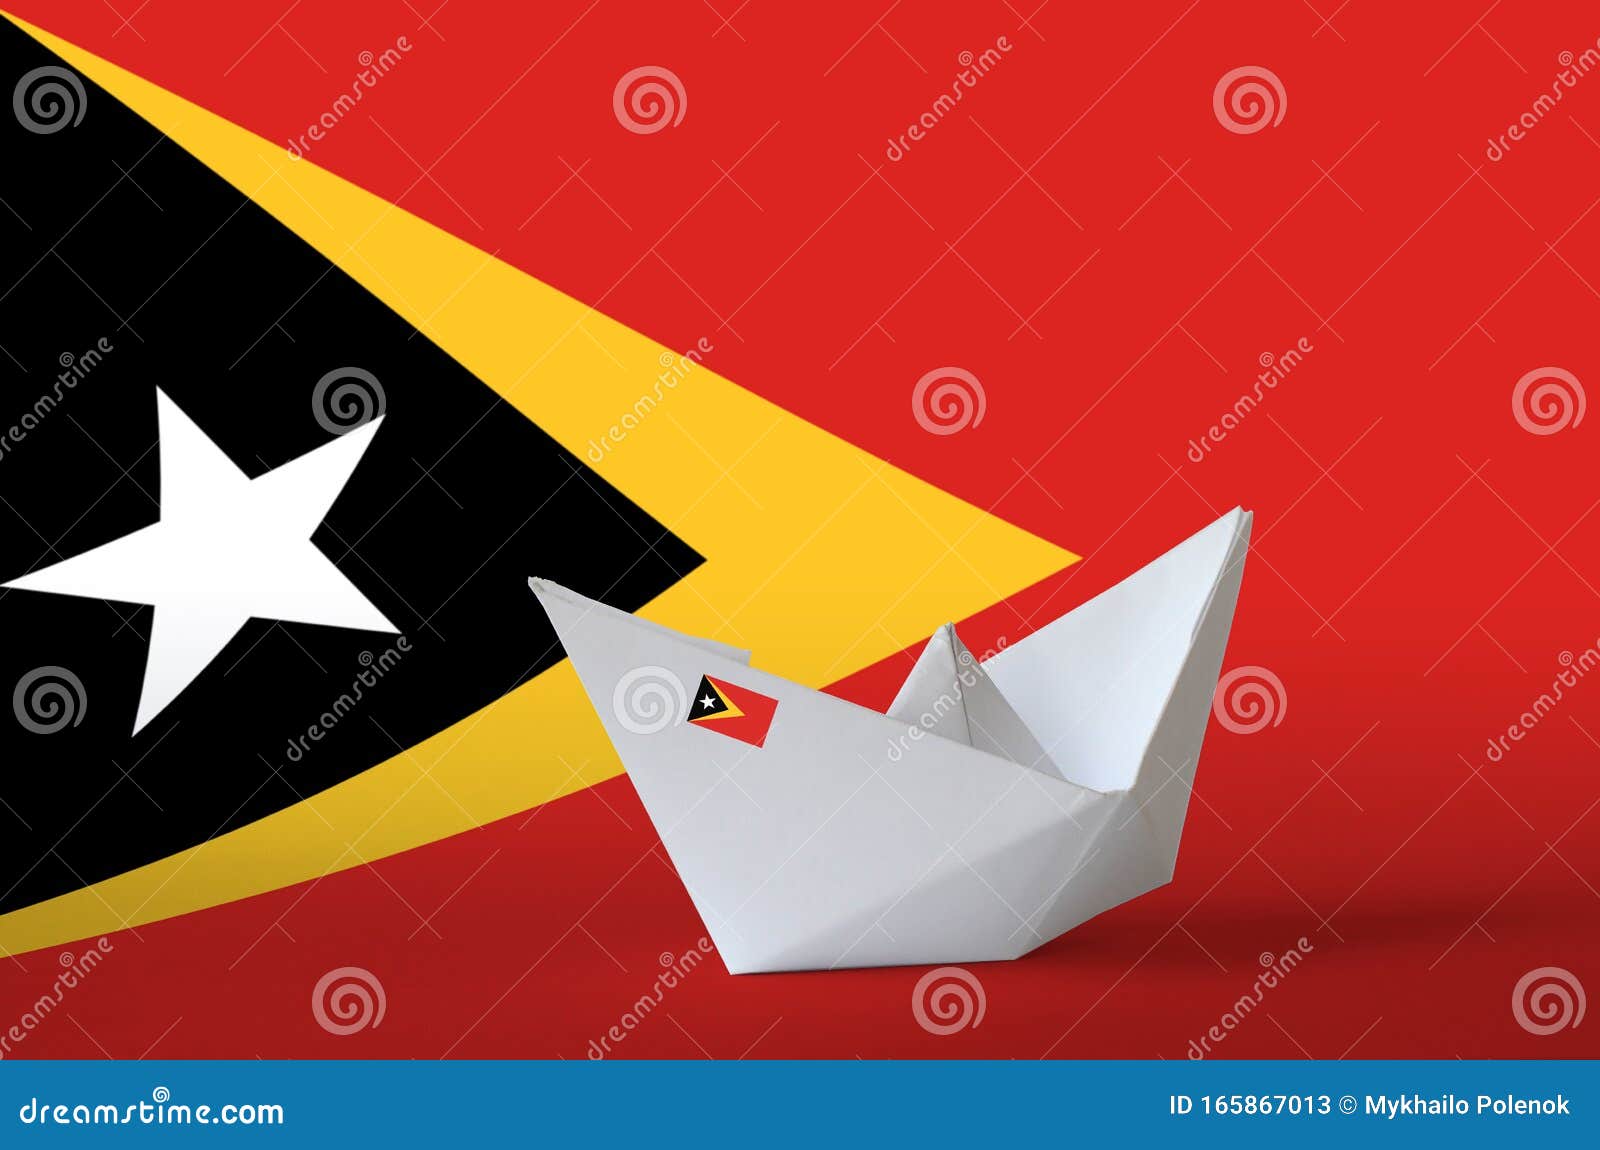 timor leste flag depicted on paper origami ship closeup. handmade arts concept